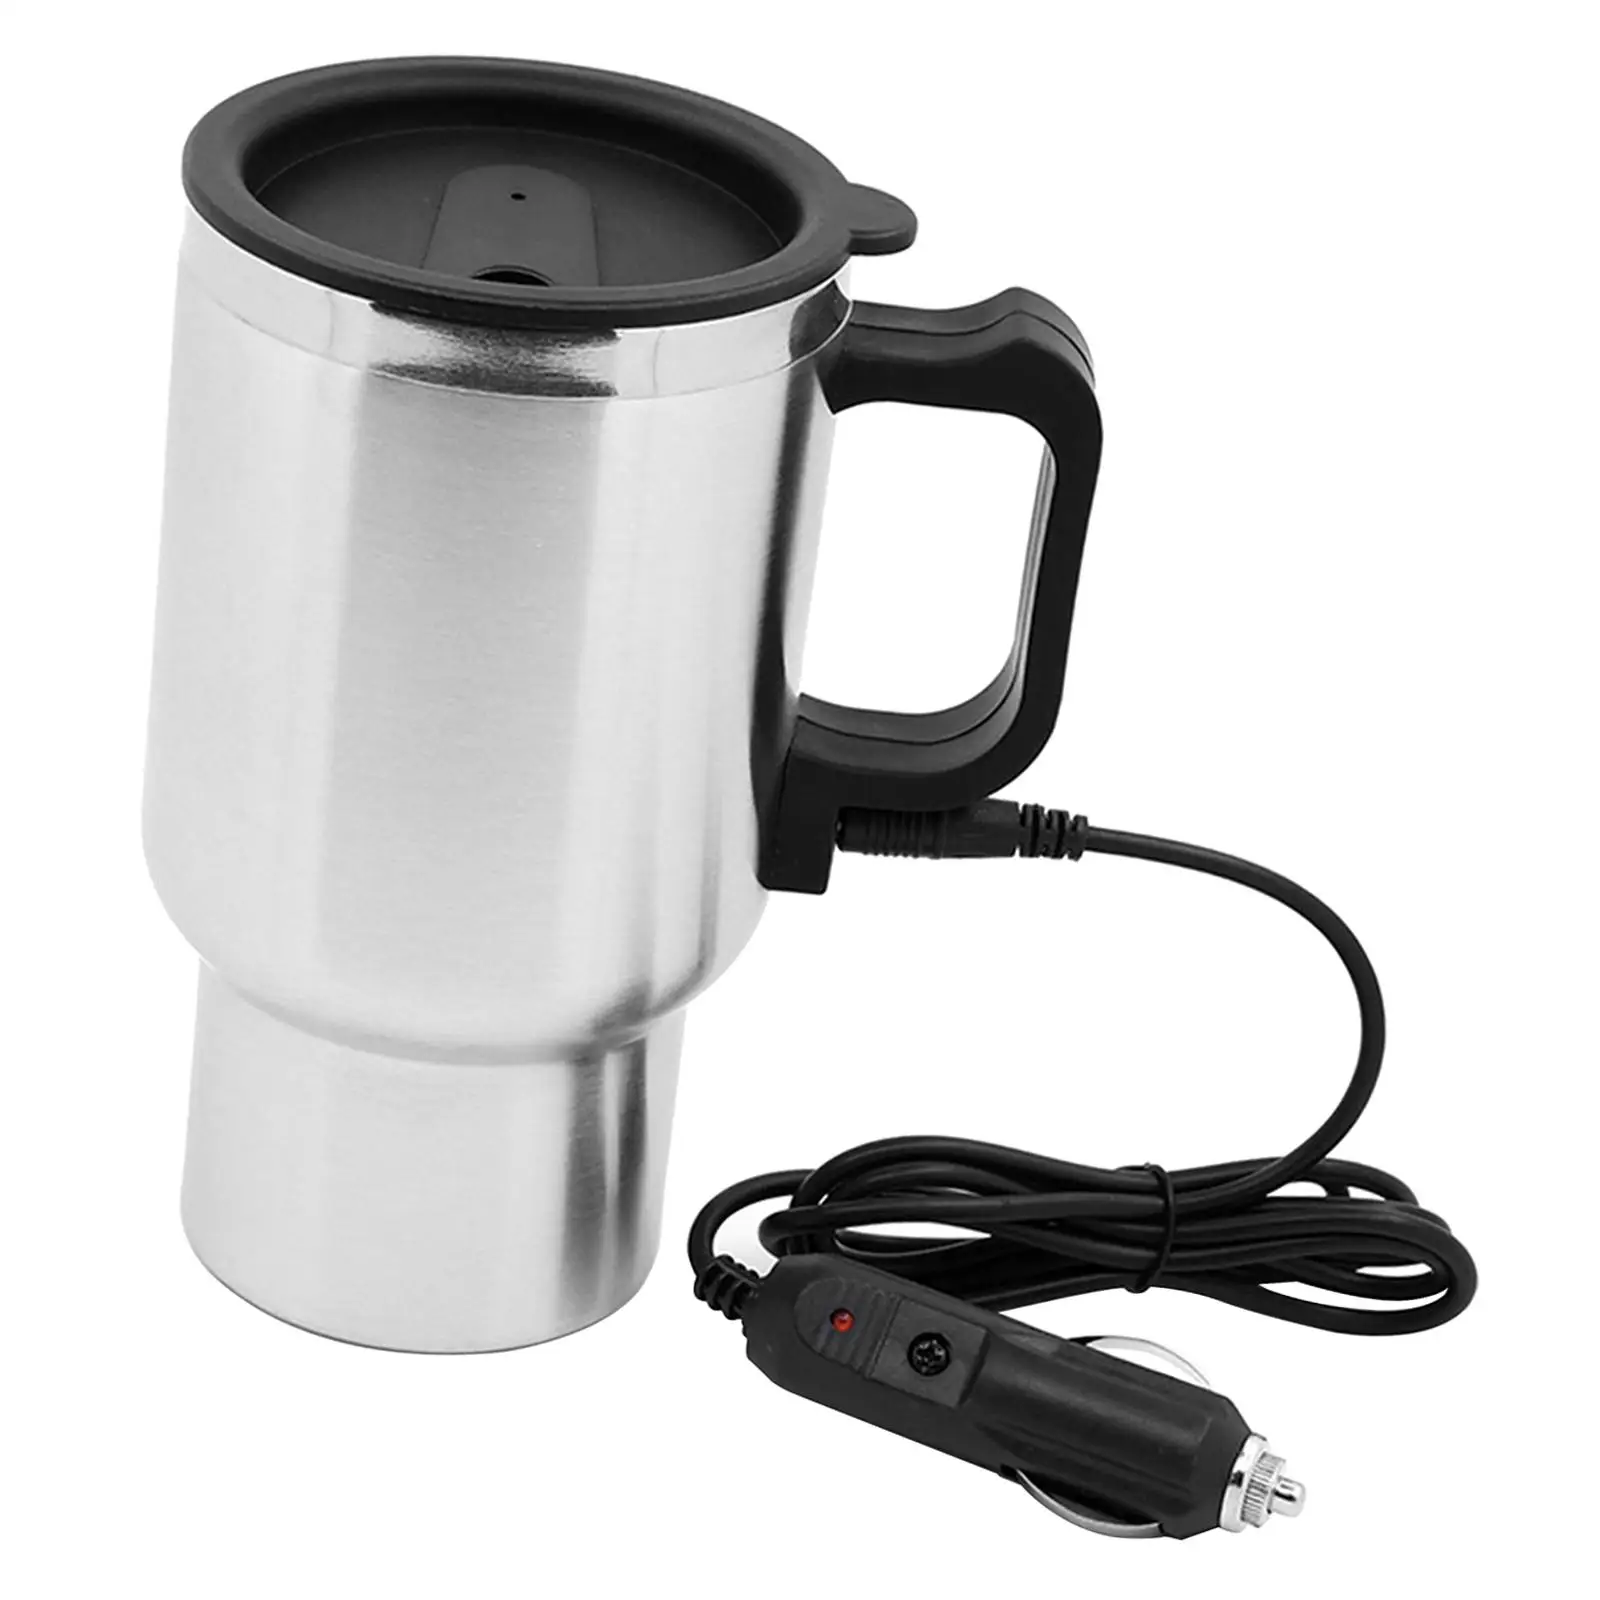 Car Heating Cup Heated Mug for Cars Trucks Heating Water Milk